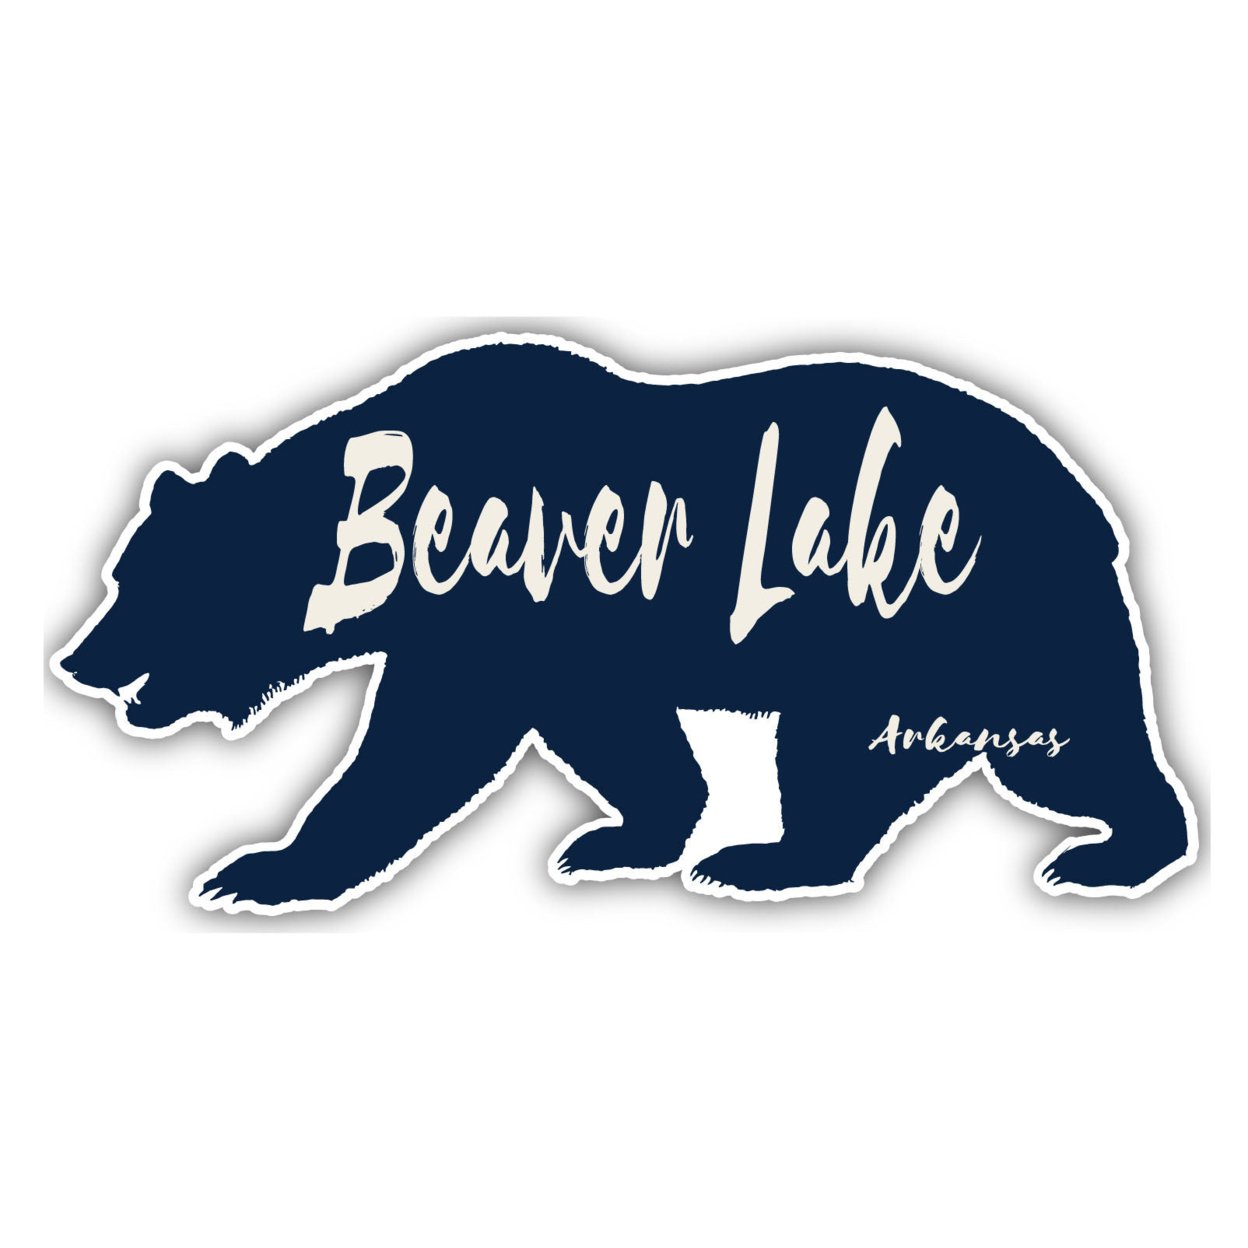 Beaver Lake Arkansas Souvenir Decorative Stickers (Choose Theme And Size) - 4-Pack, 6-Inch, Adventures Awaits